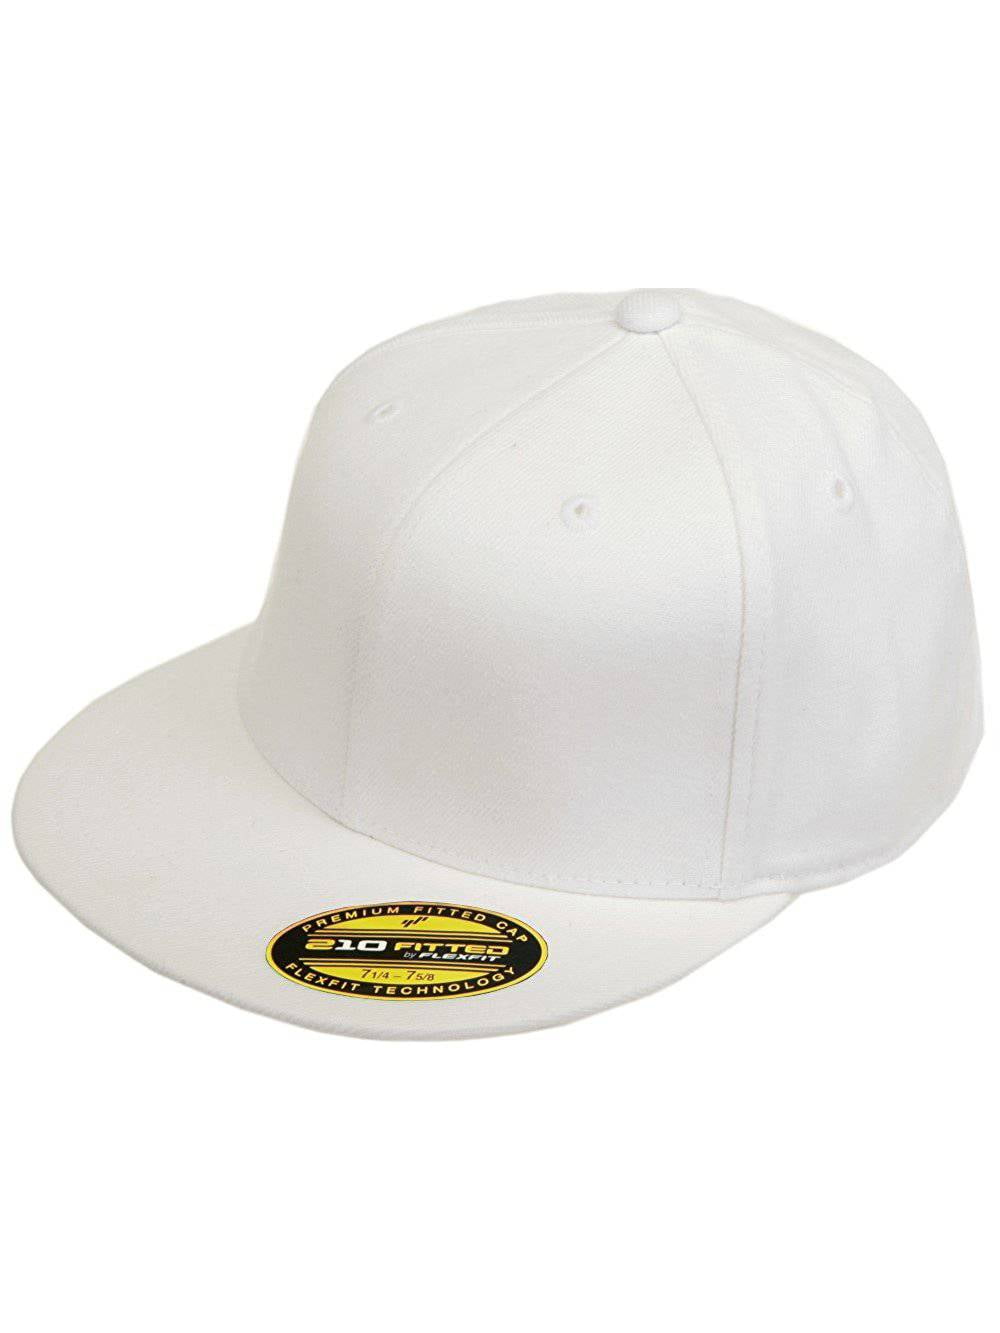 Yupoong 6210 Flexfit White Cap, Premium Fitted L/XL